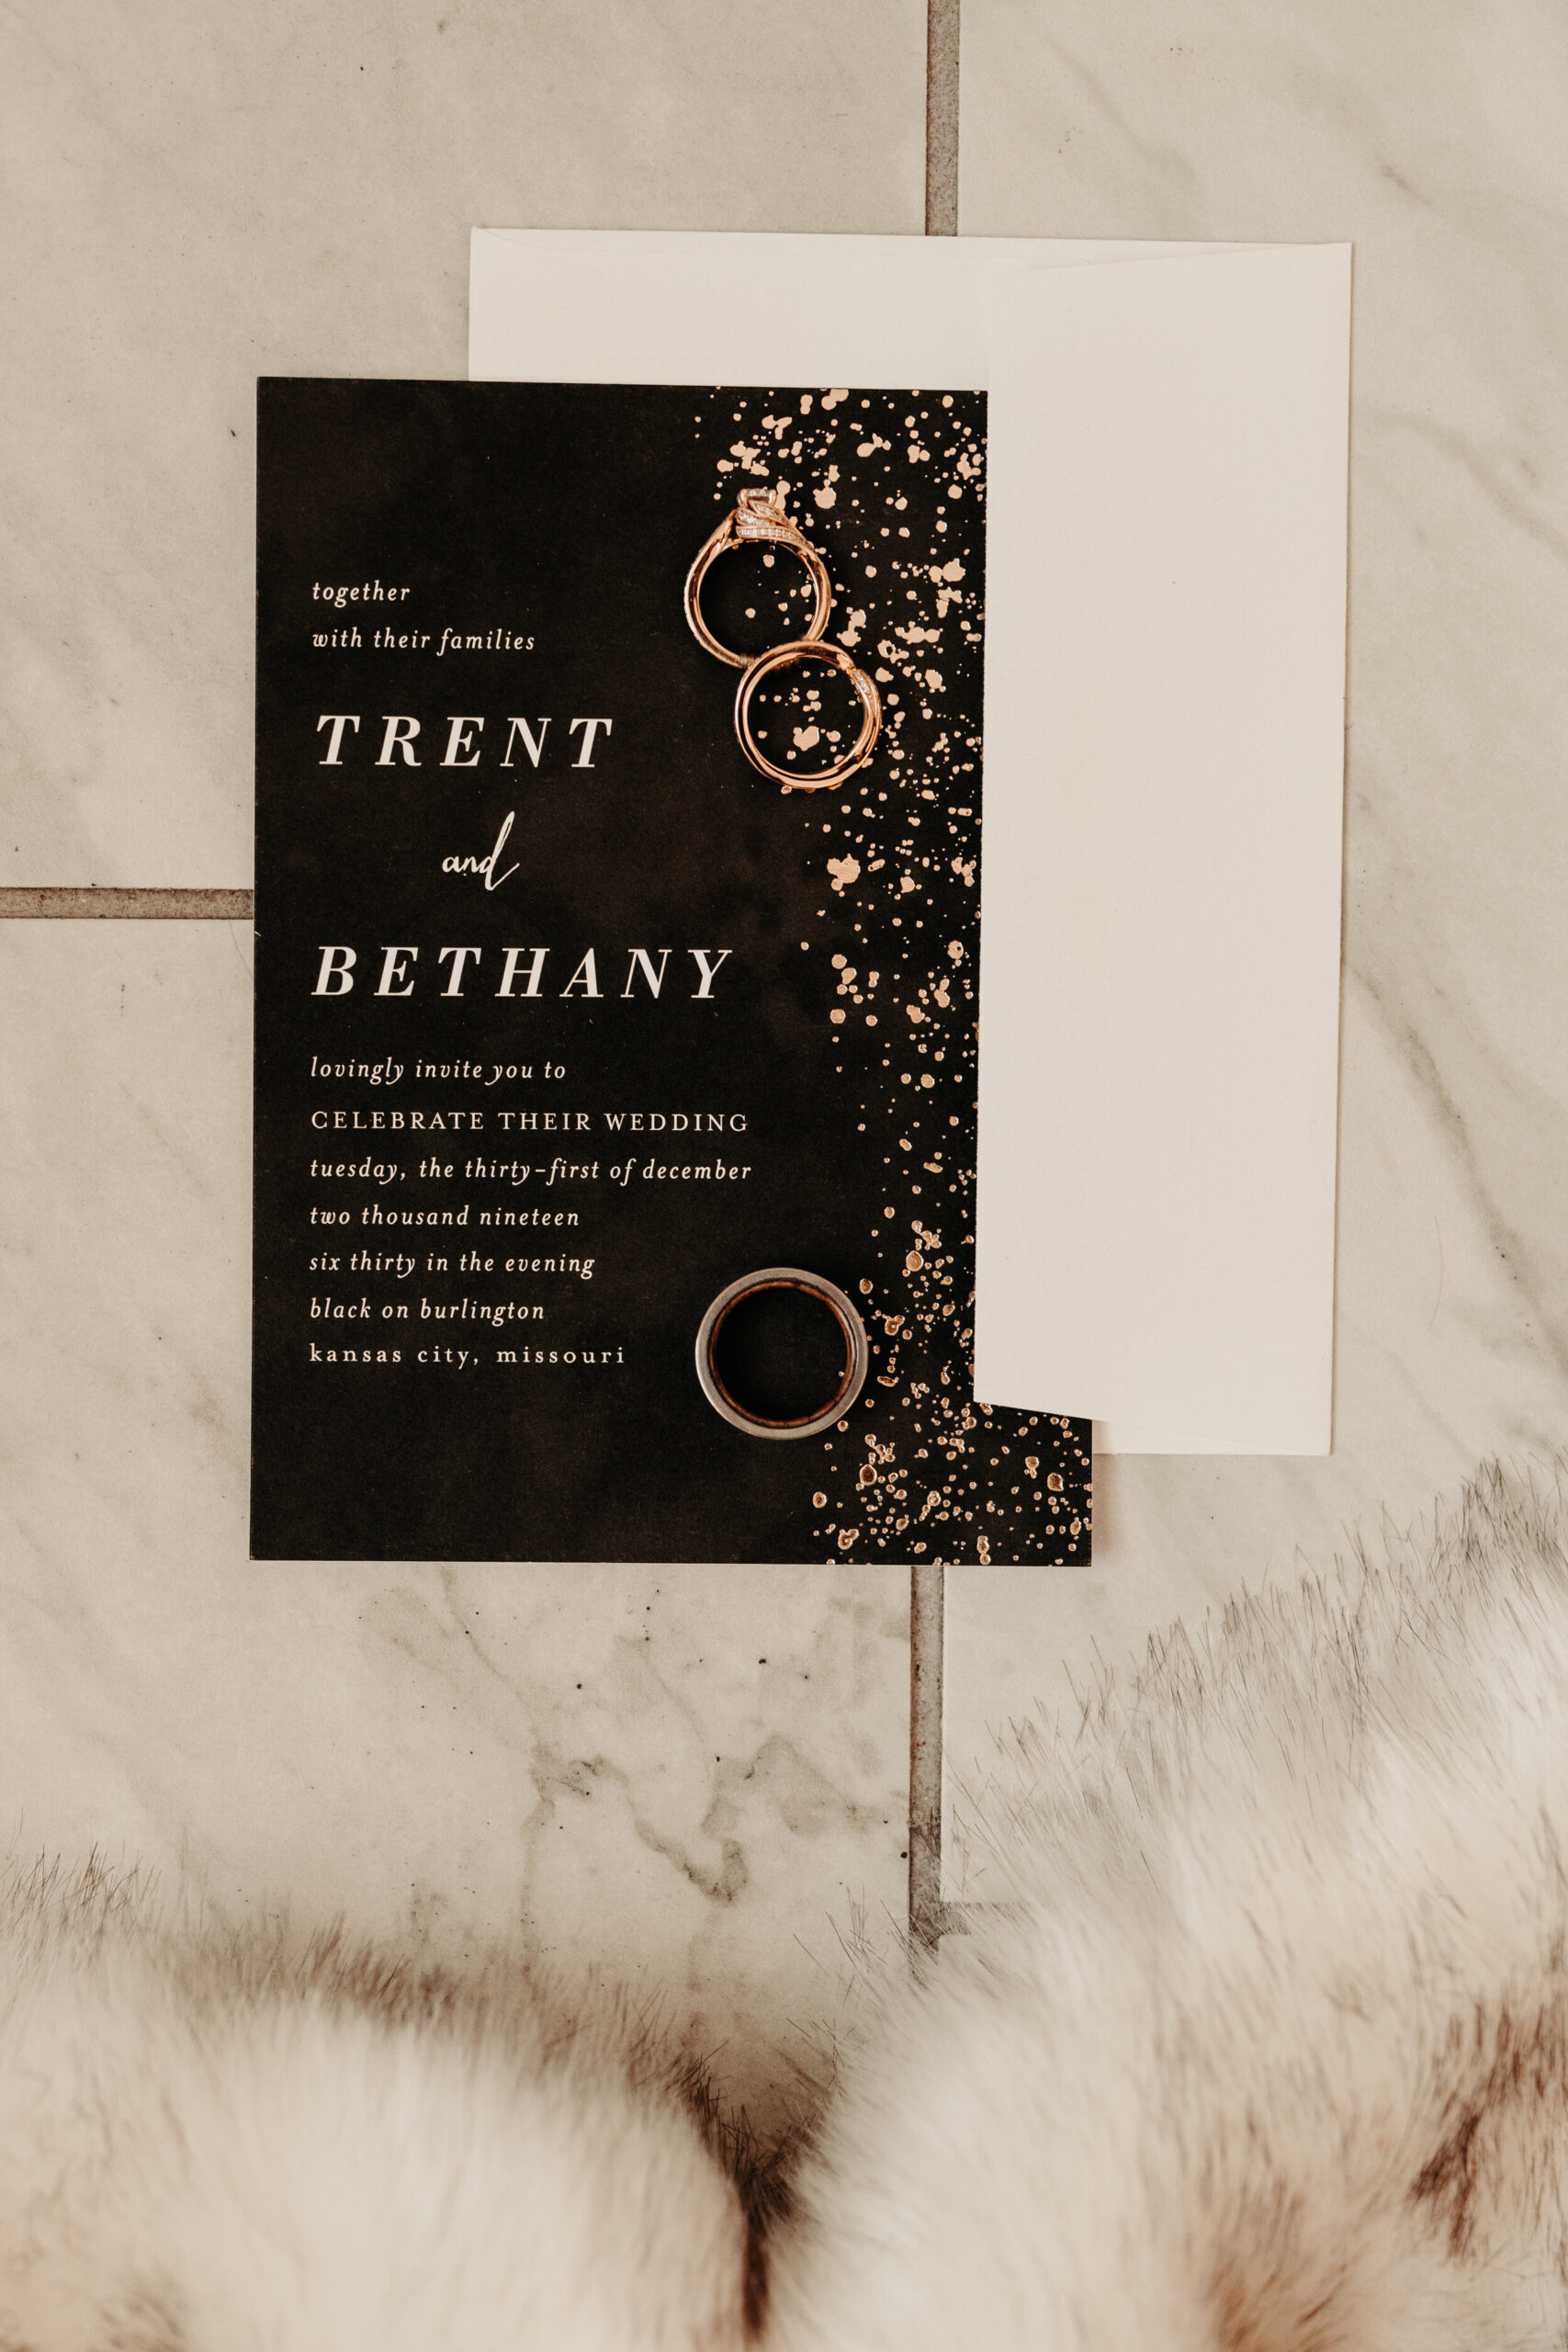 Bethany + Trent - New Years Eve Industrial Wedding Kansas City, Missouri11.jpg